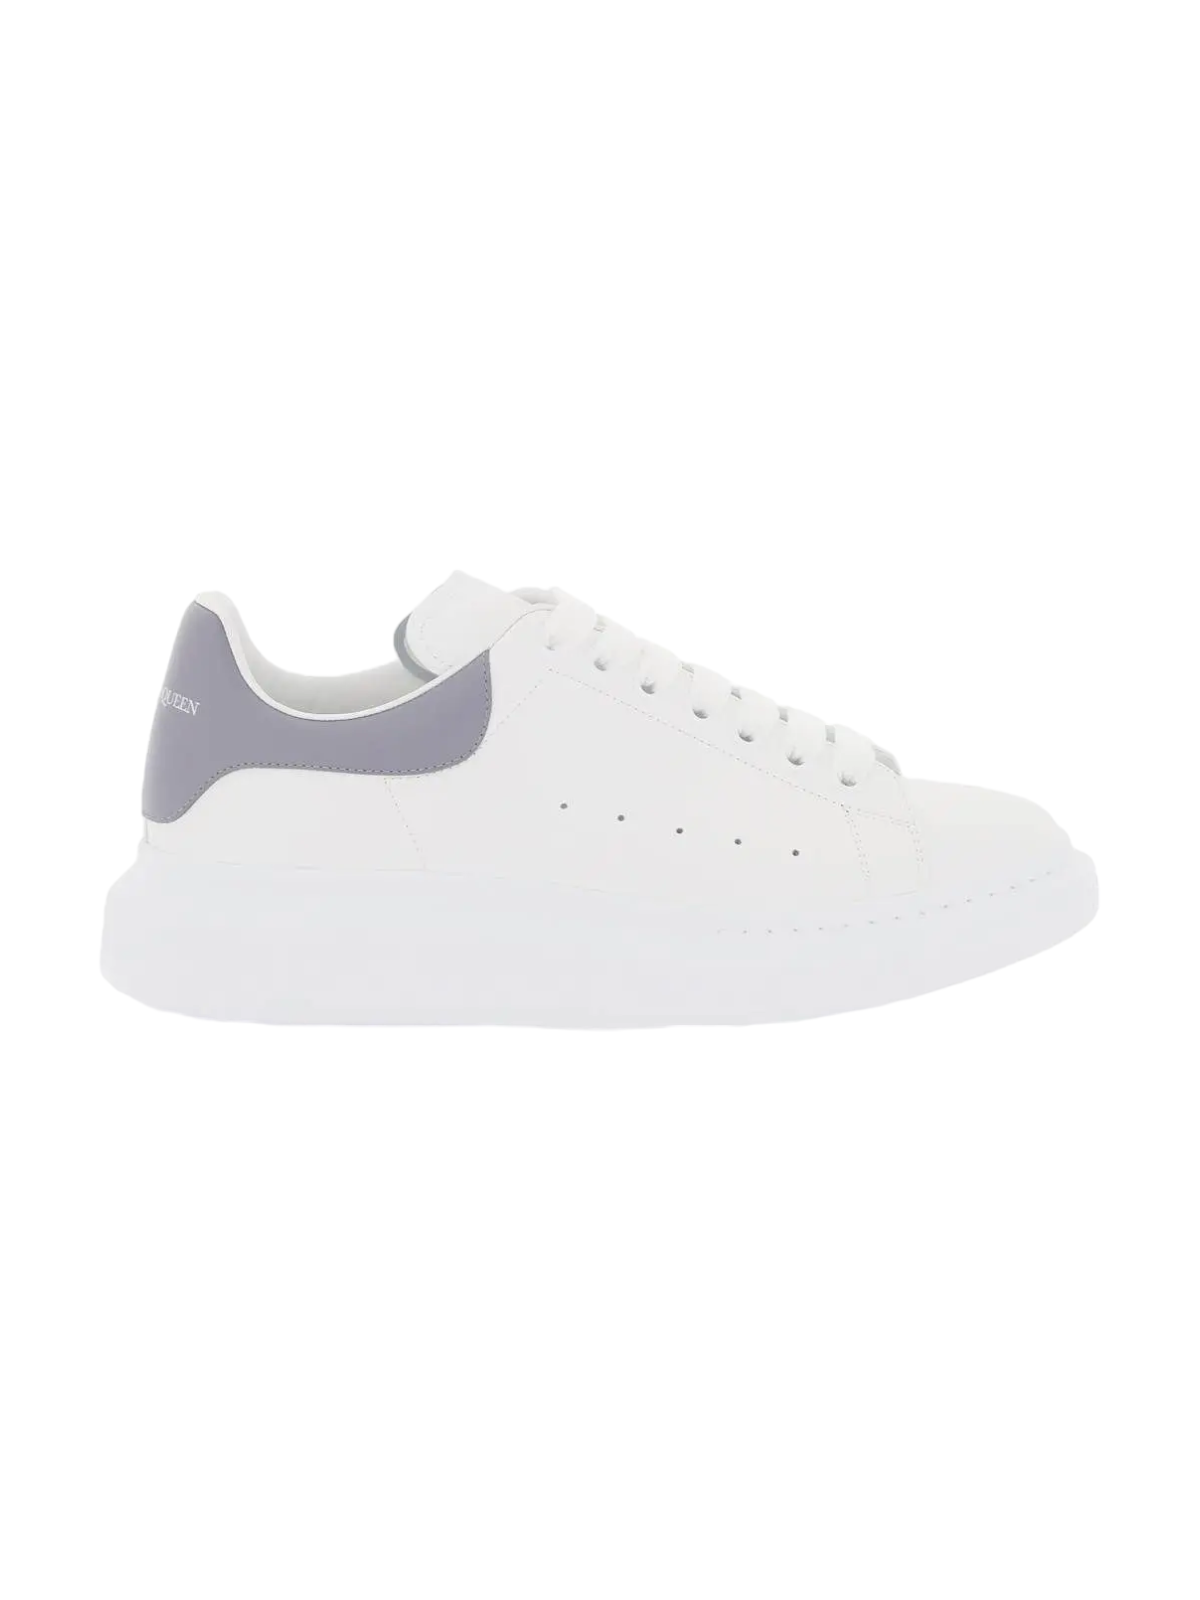 Alexander McQueen Oversized Logo Sneakers White/Grey